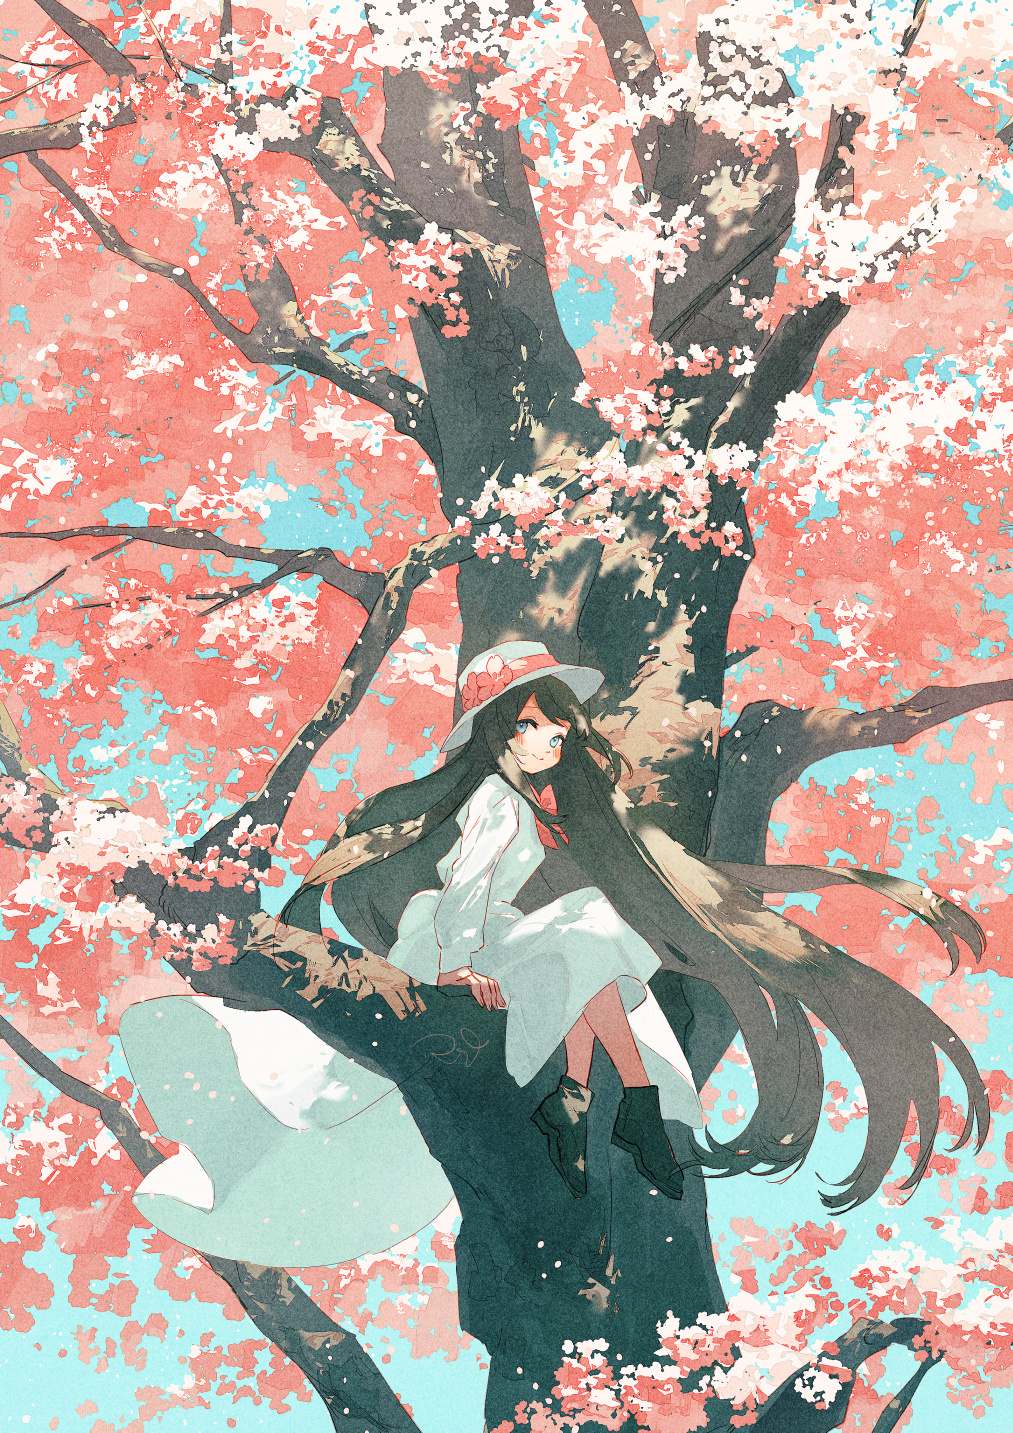 Anime 1013x1433 anime anime girls Pixiv Potg hat long hair sitting trees looking at viewer smiling blushing portrait display petals